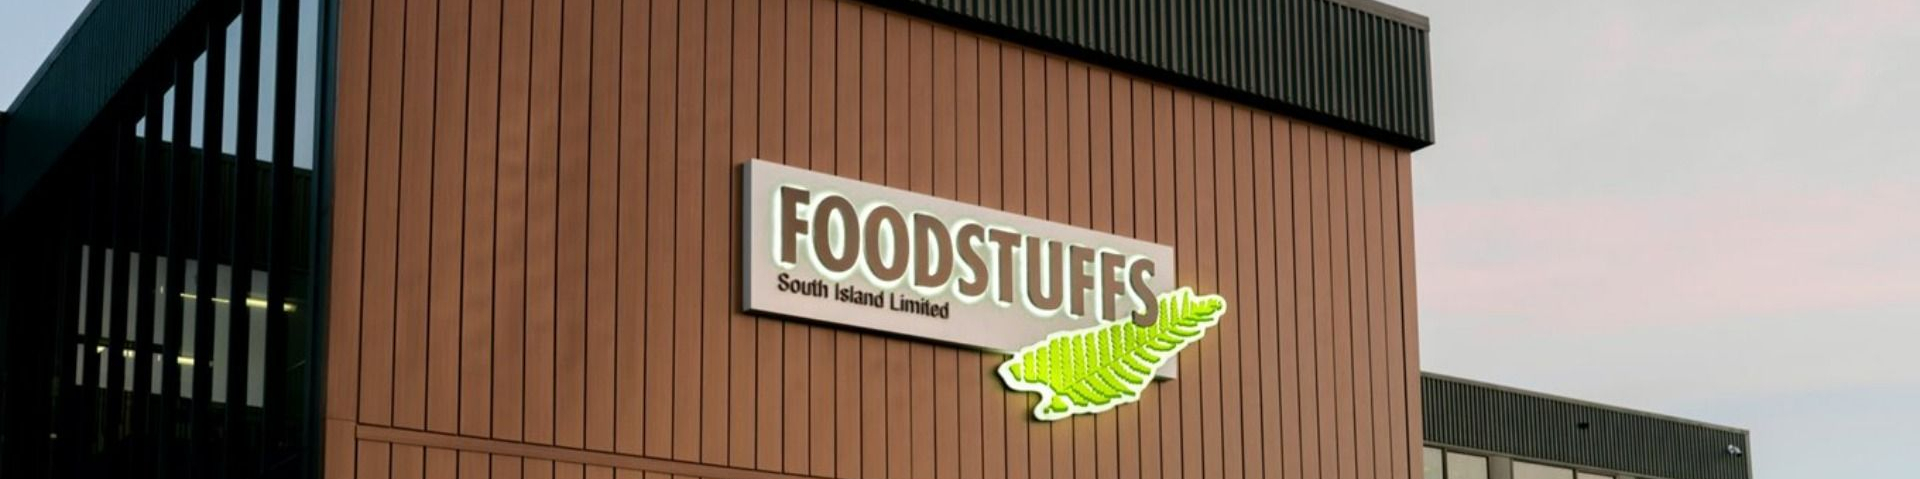 Foodstuffs_SI_Shopfront